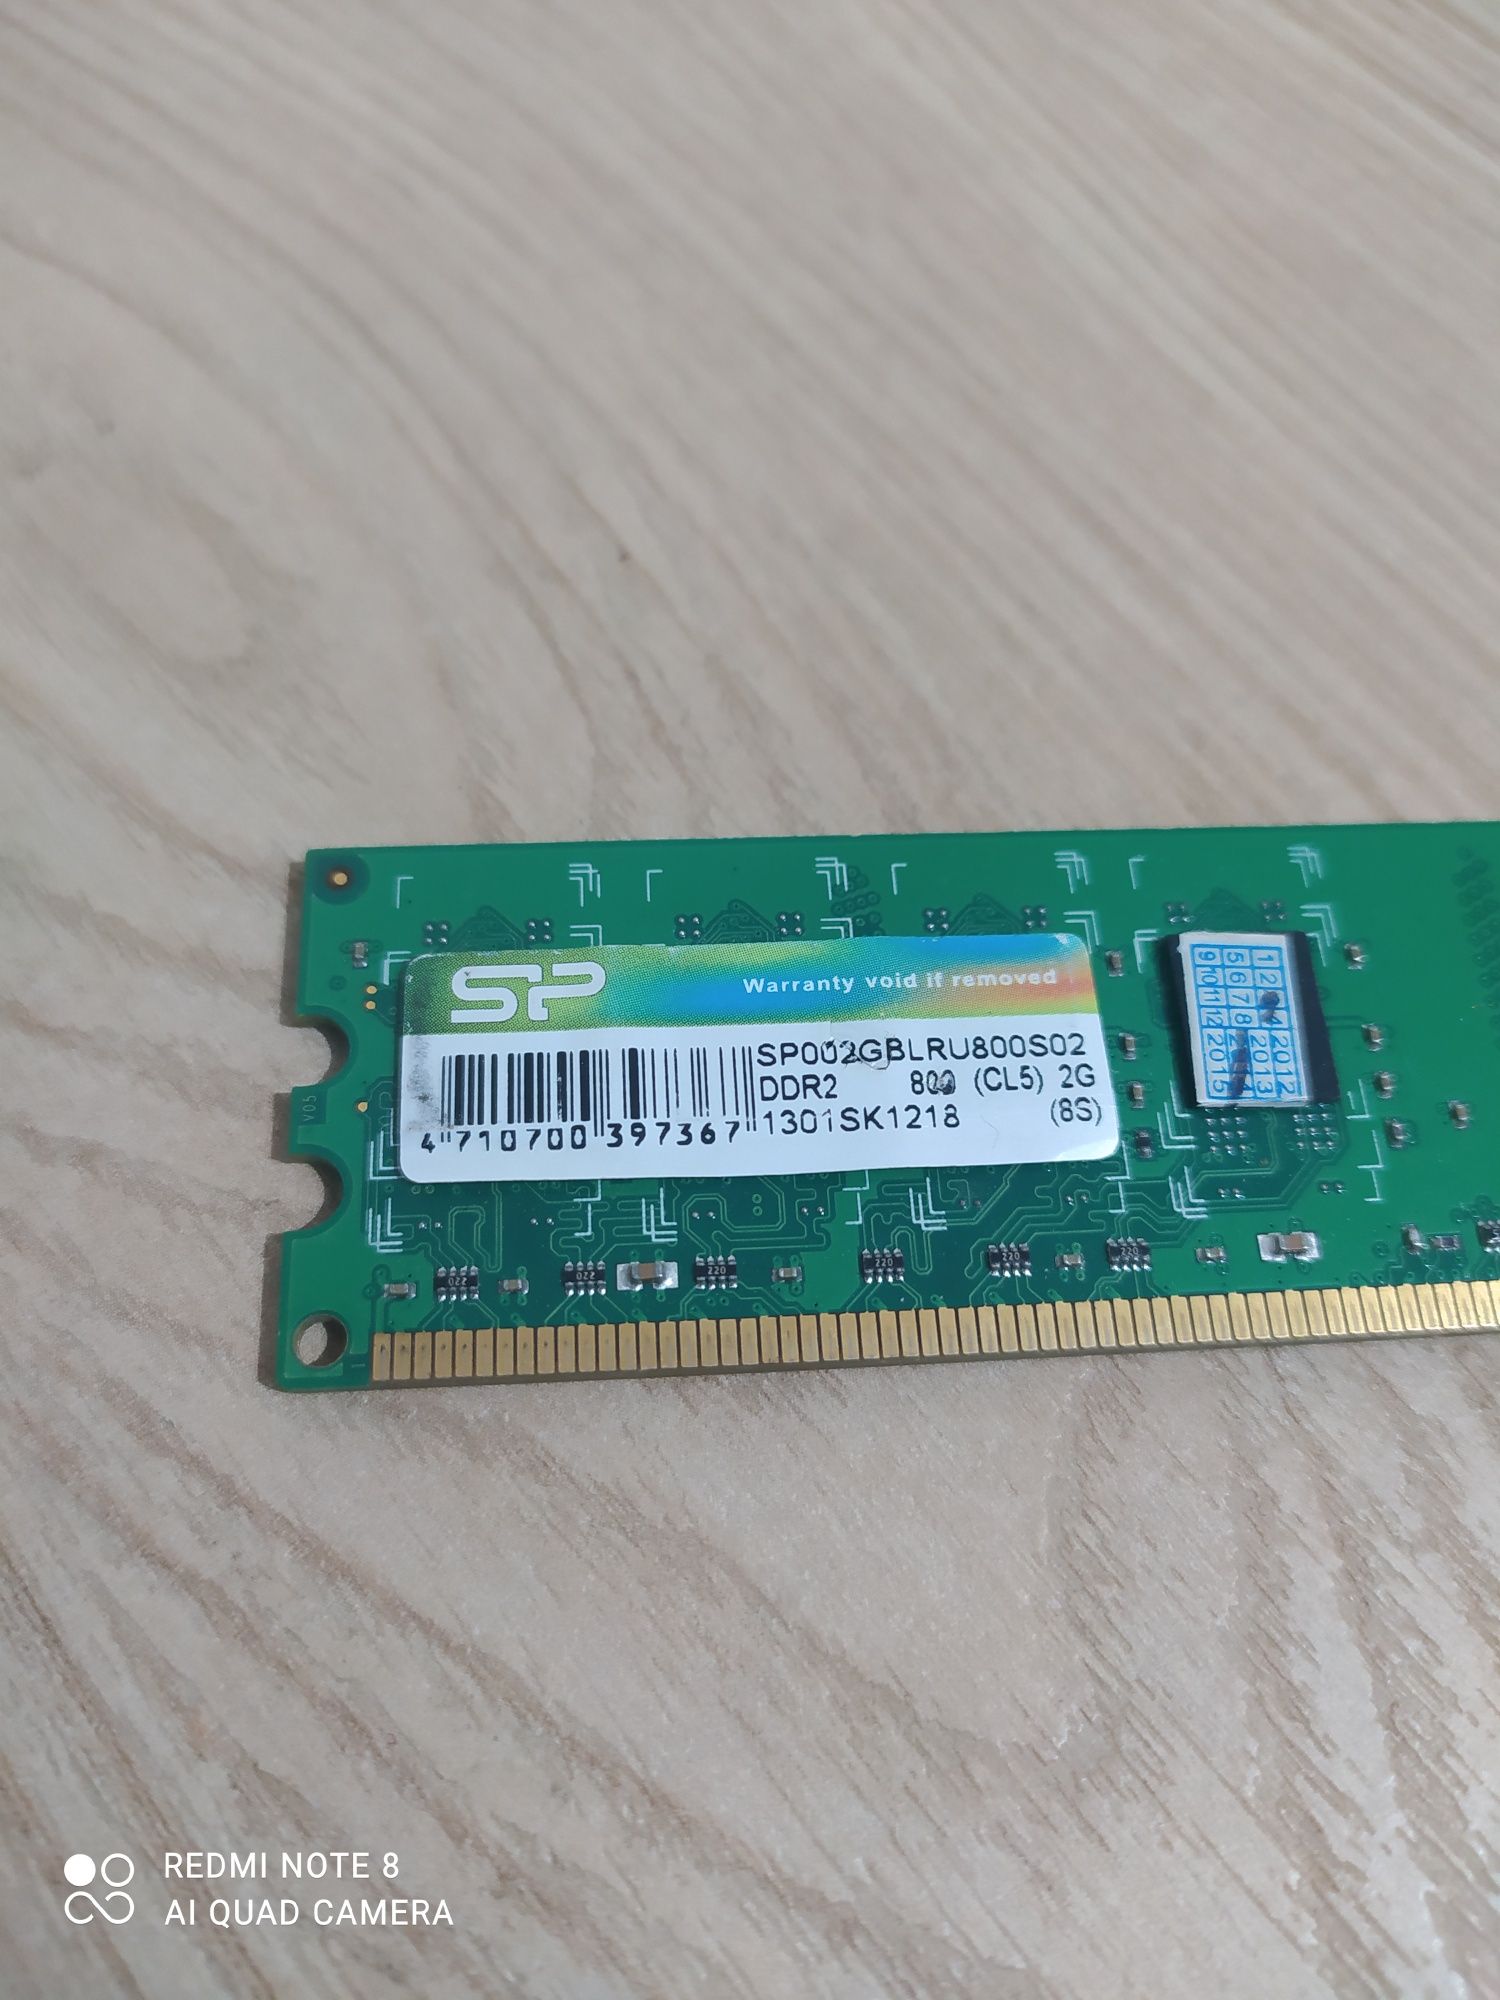 ОЗУ для компьютеров DDR2 за 2000тг/шт. обший 4шт.